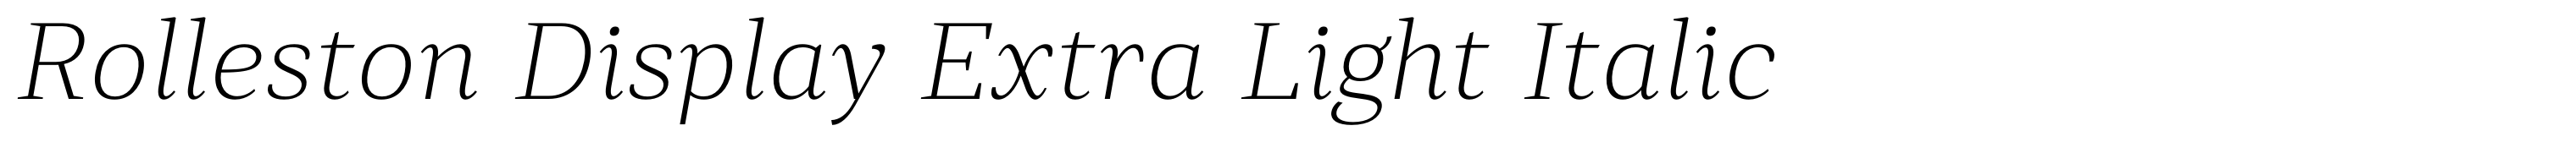 Rolleston Display Extra Light Italic